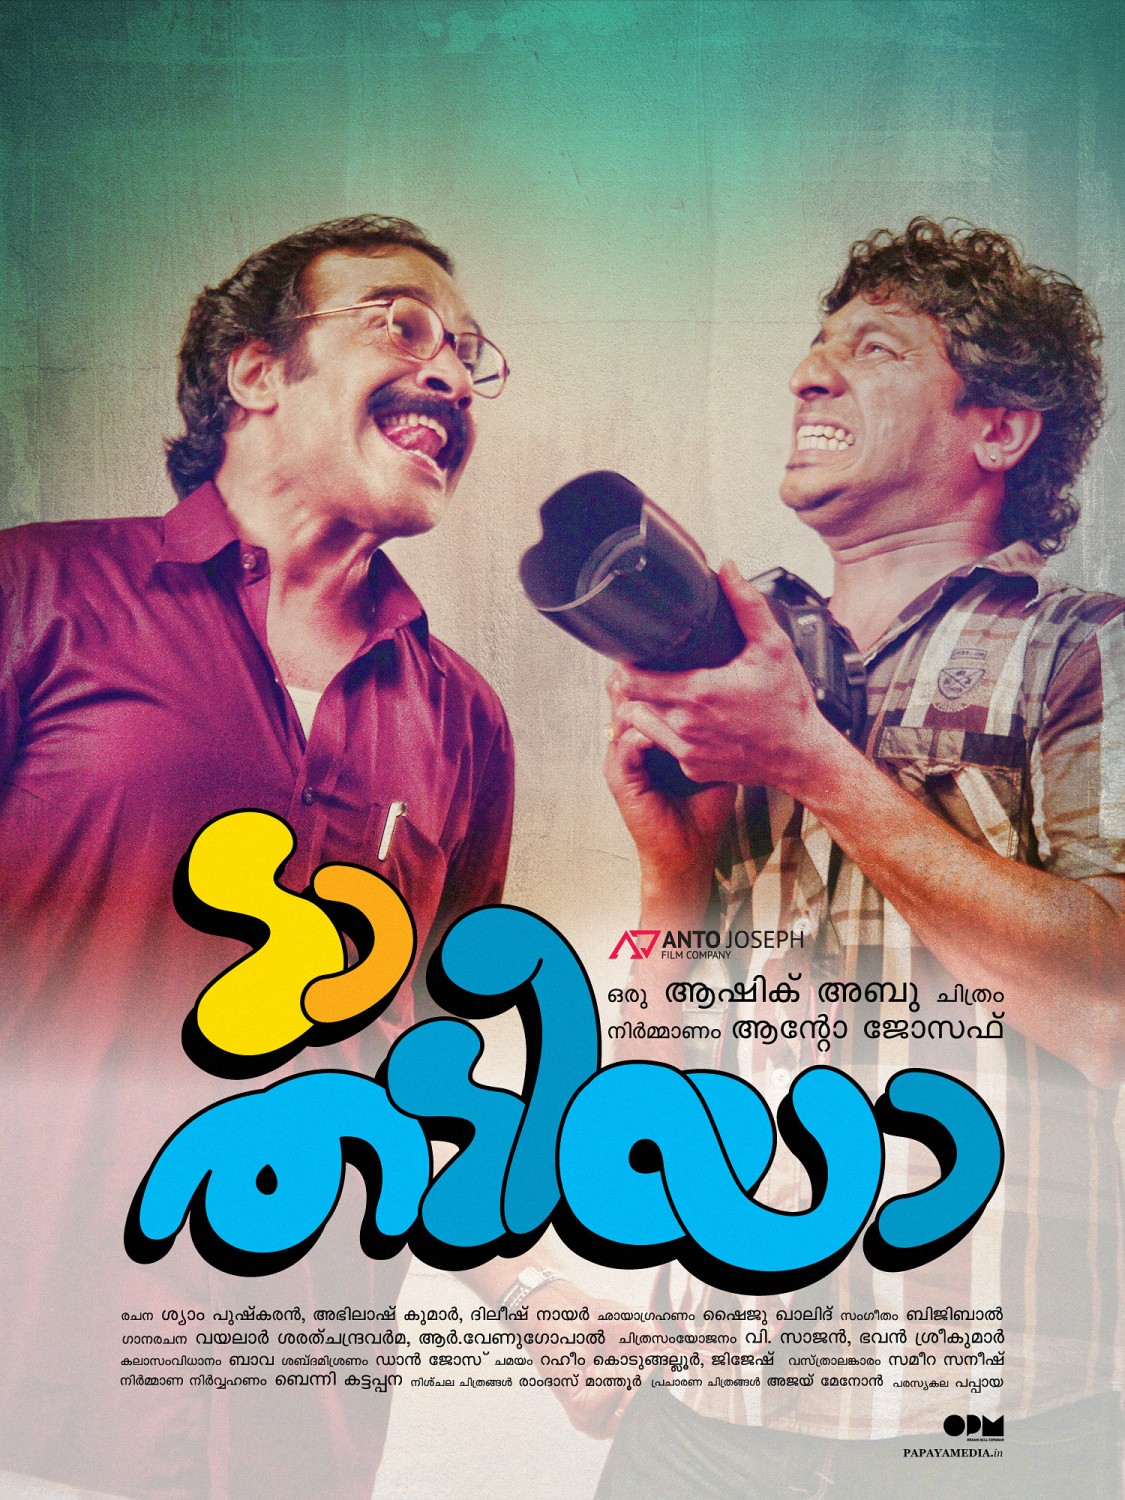 Extra Large Movie Poster Image for Da Thadiya (#26 of 50)